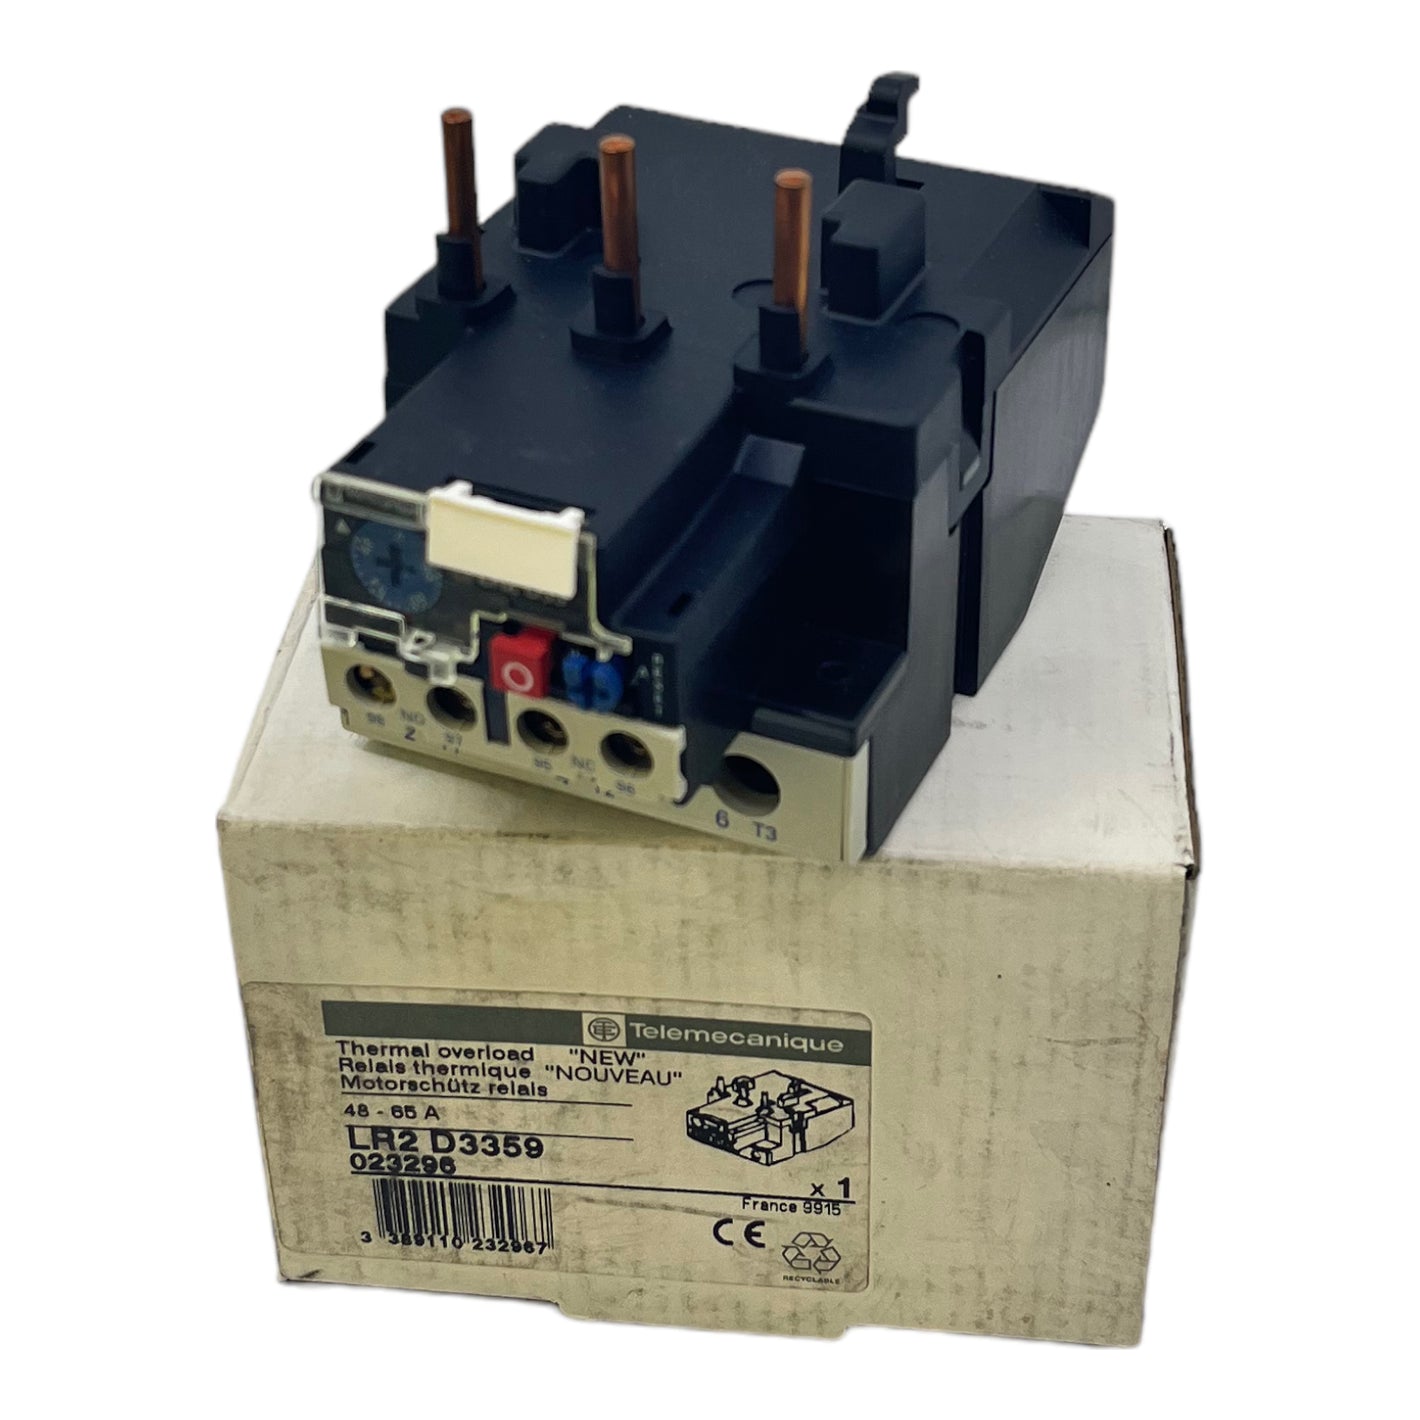 Telemecanique LR2D3359 Motor contactor relay overload relay 600V AC 